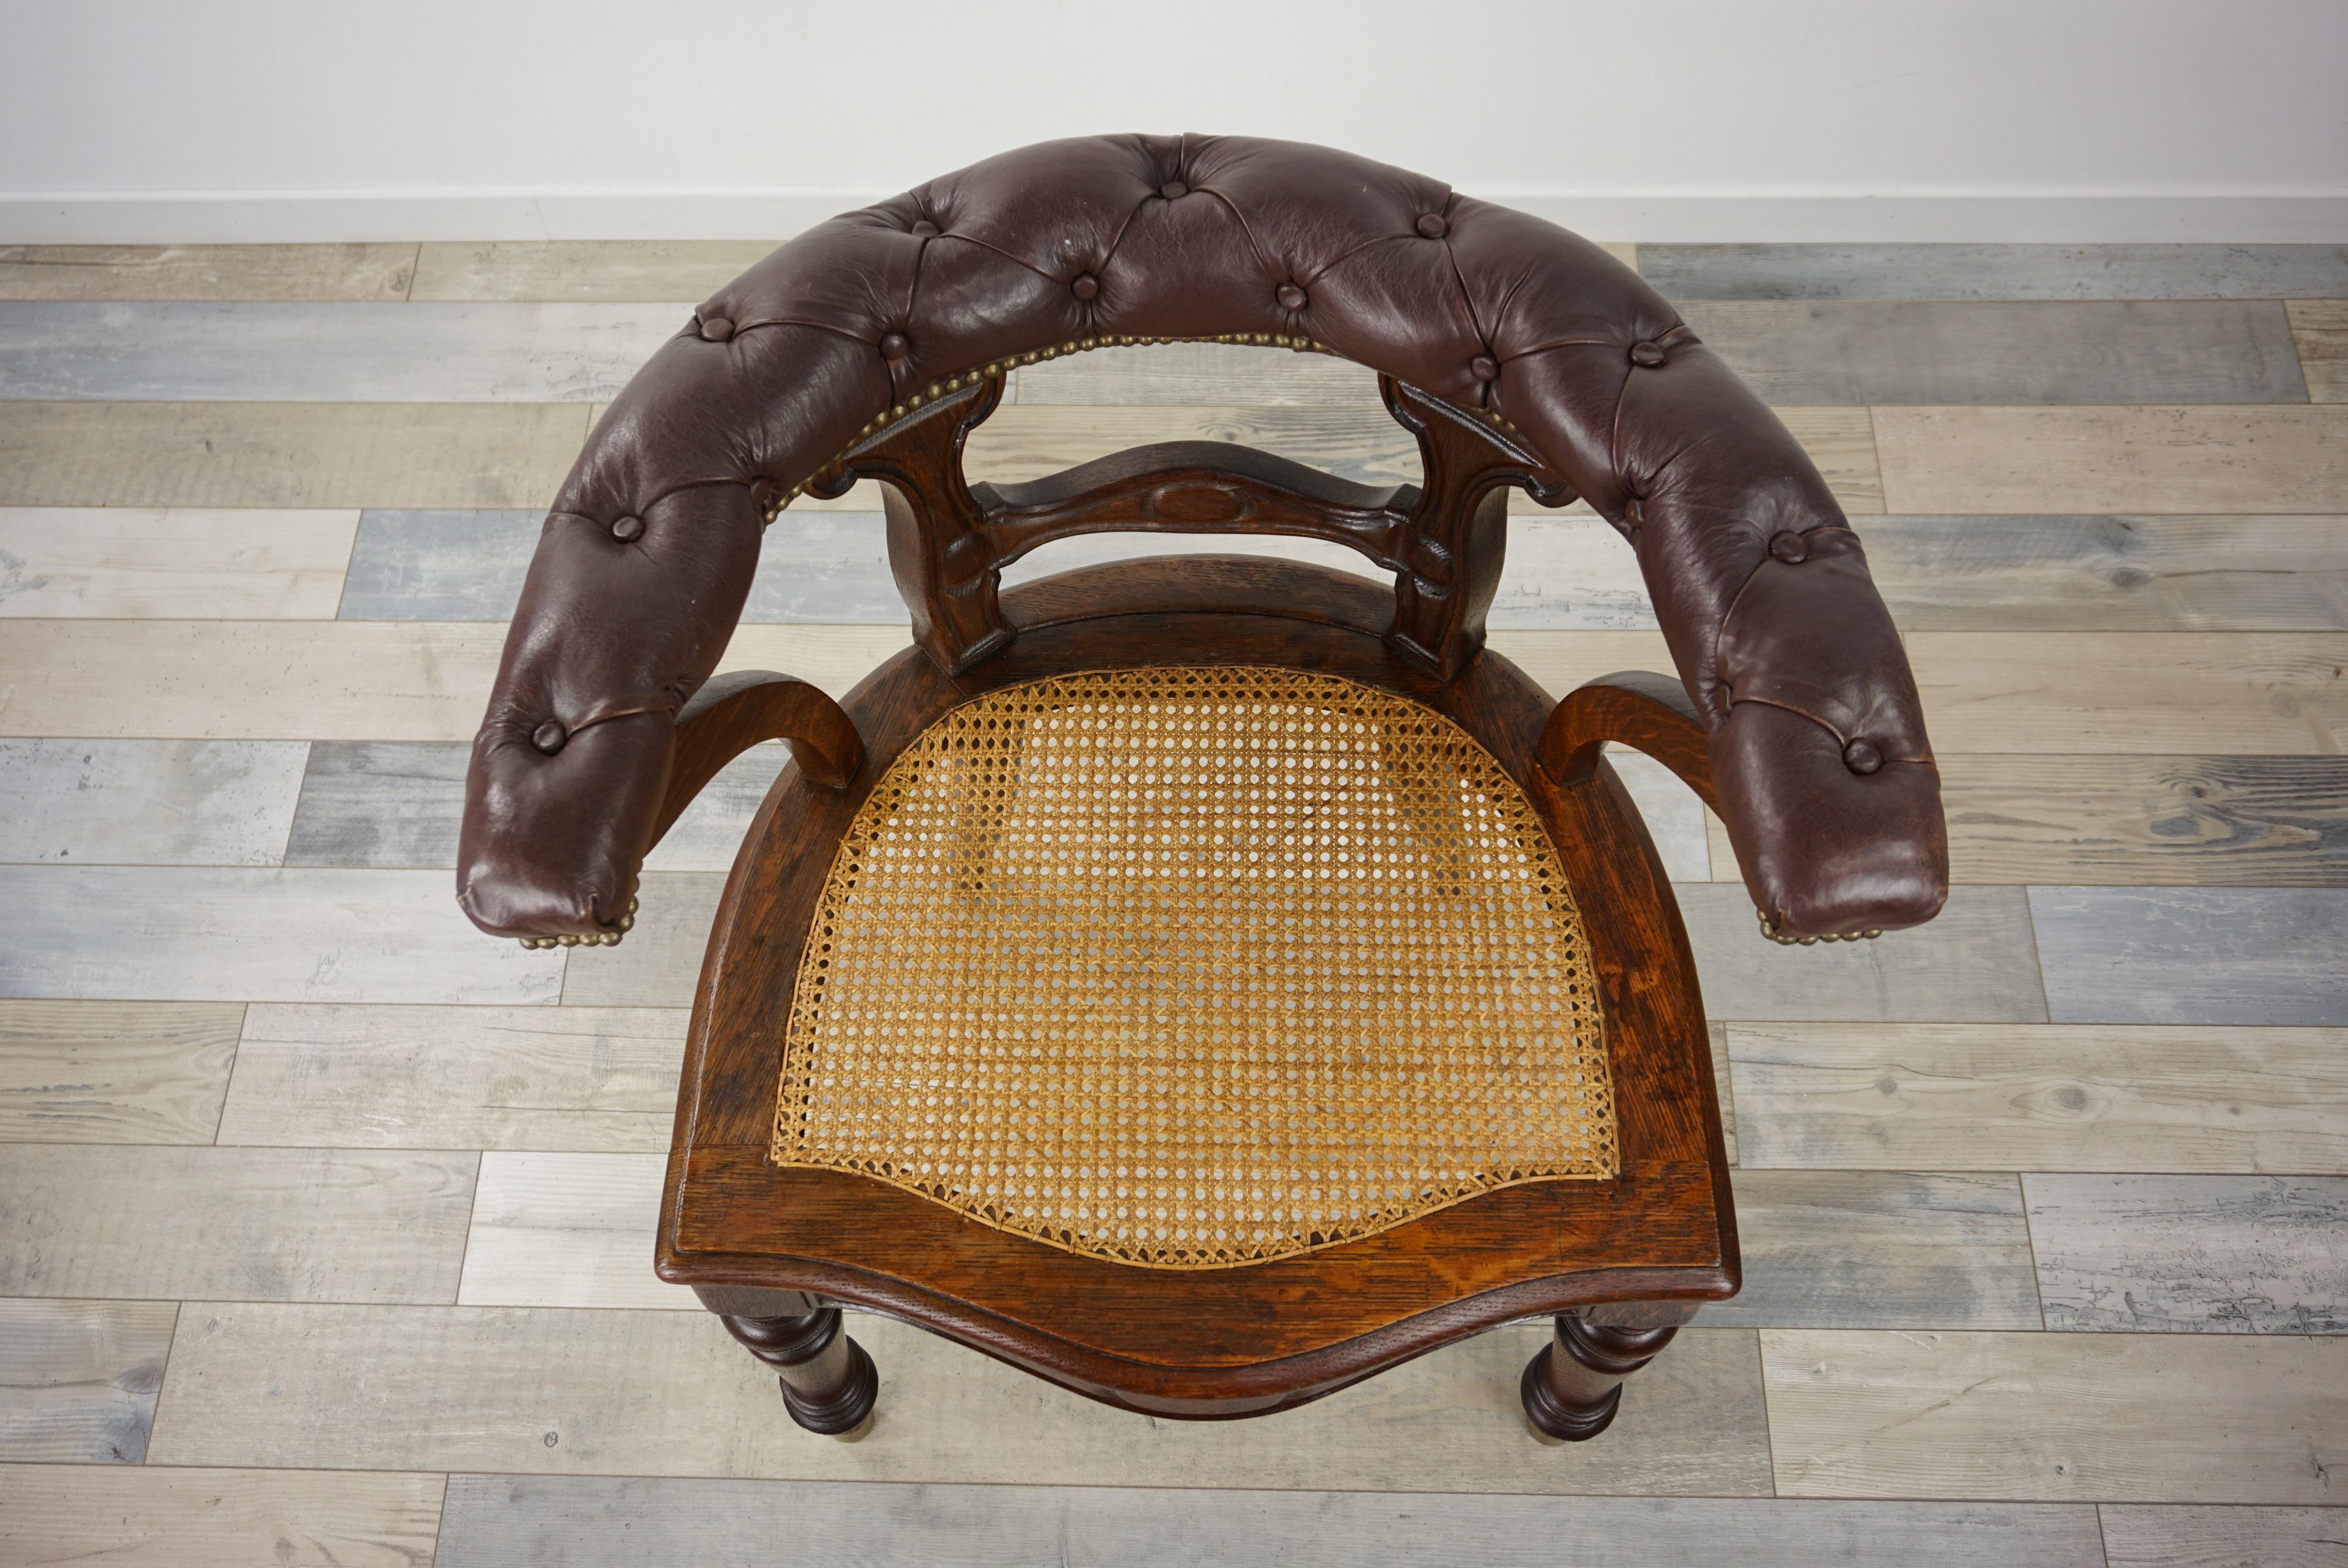 European Leather and Wicker Cane 19th Century William IV Design Antique Desk Chair